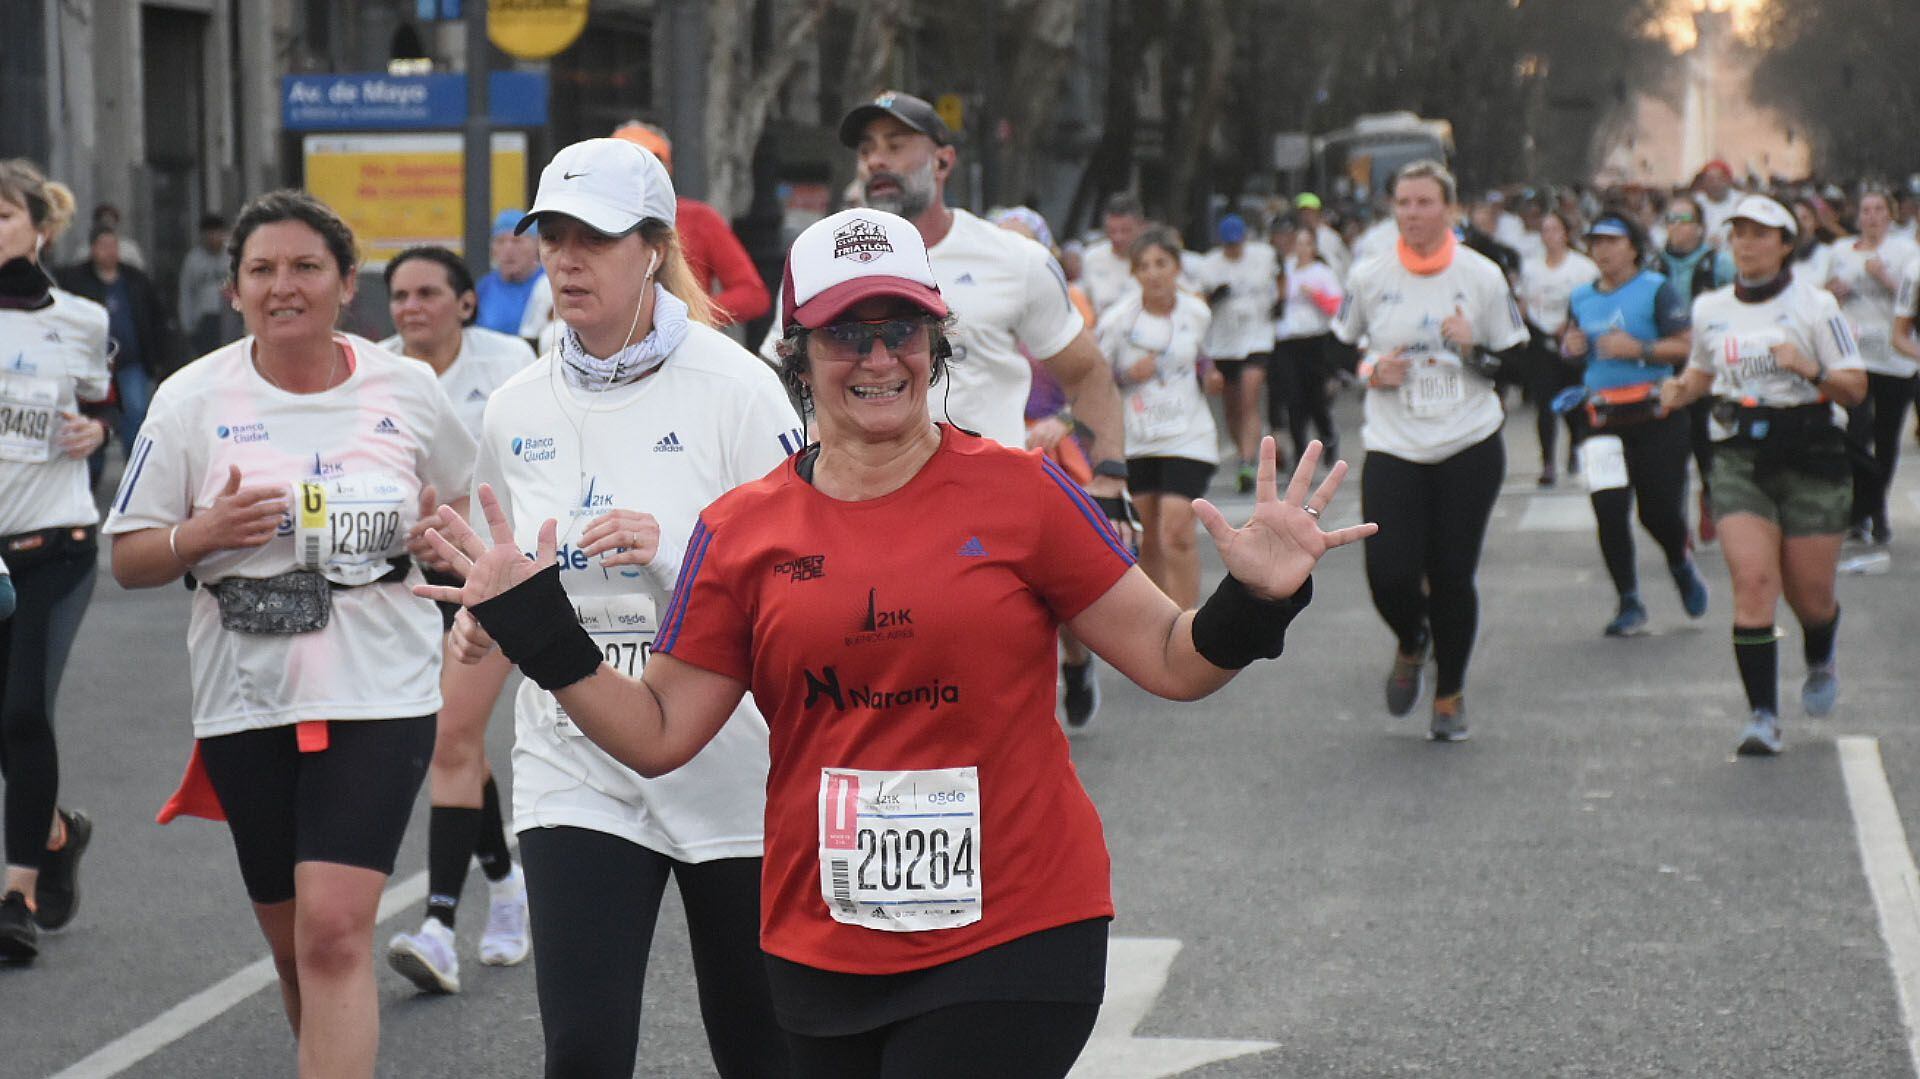 Media Maraton 21k - Buenos aires